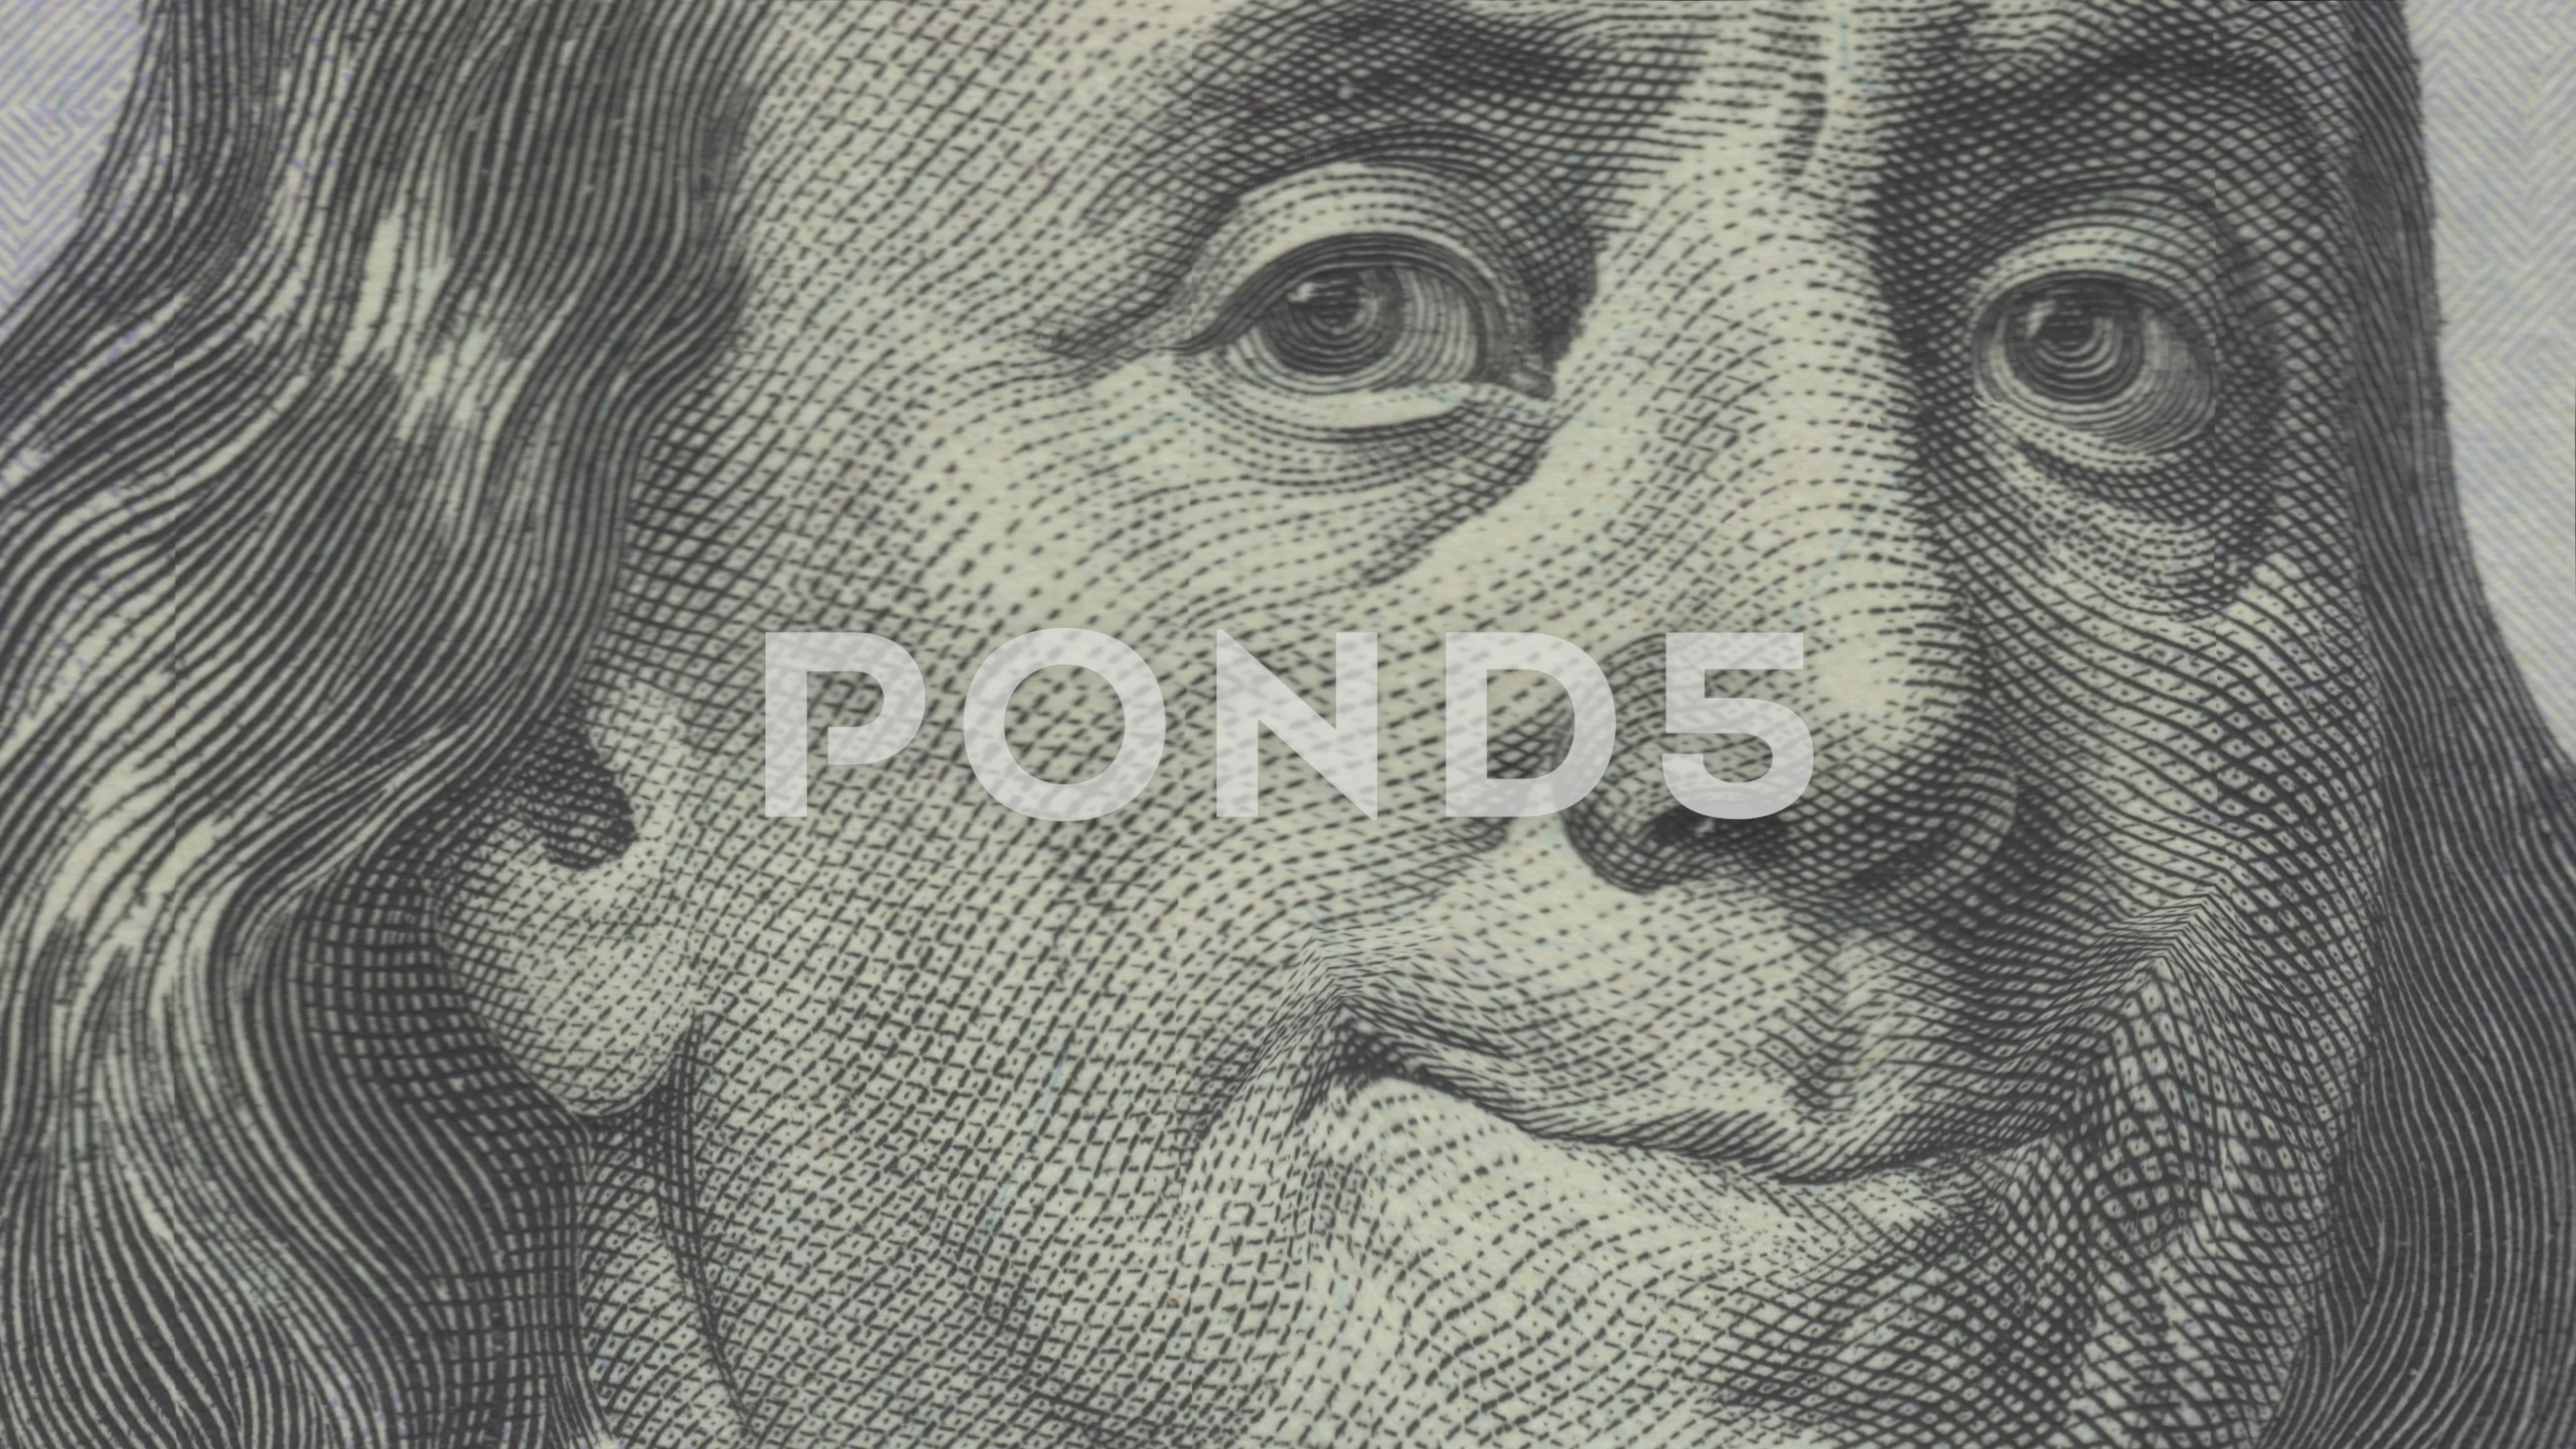 Why is Benjamin Franklin on the $100 bill? – Benjamin Franklin